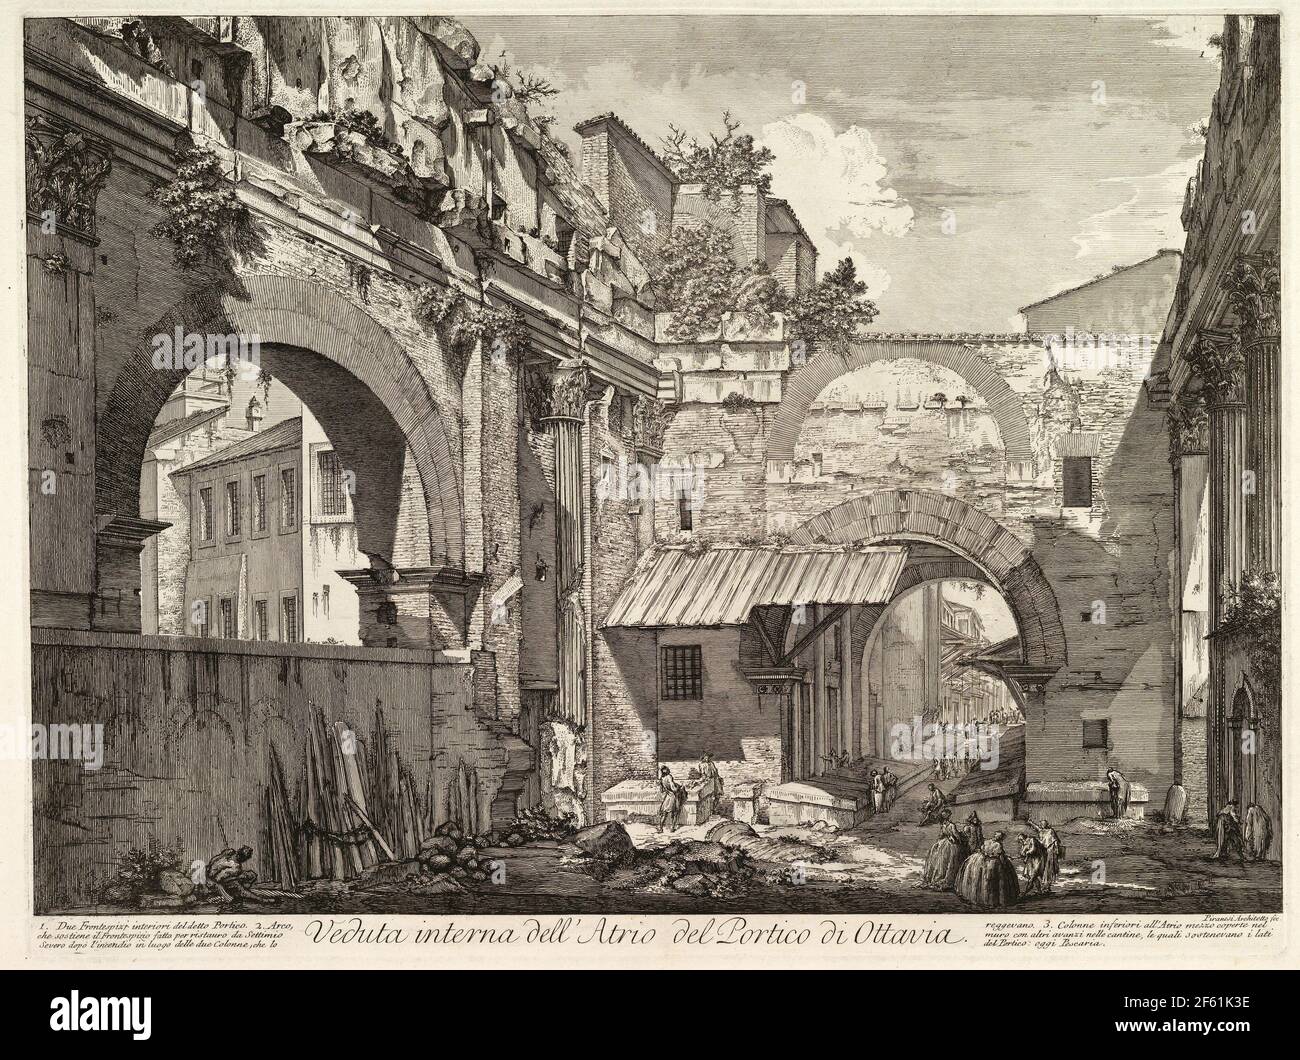 Portikus von Octavia, Rom, Piranesi, 1760 Stockfoto